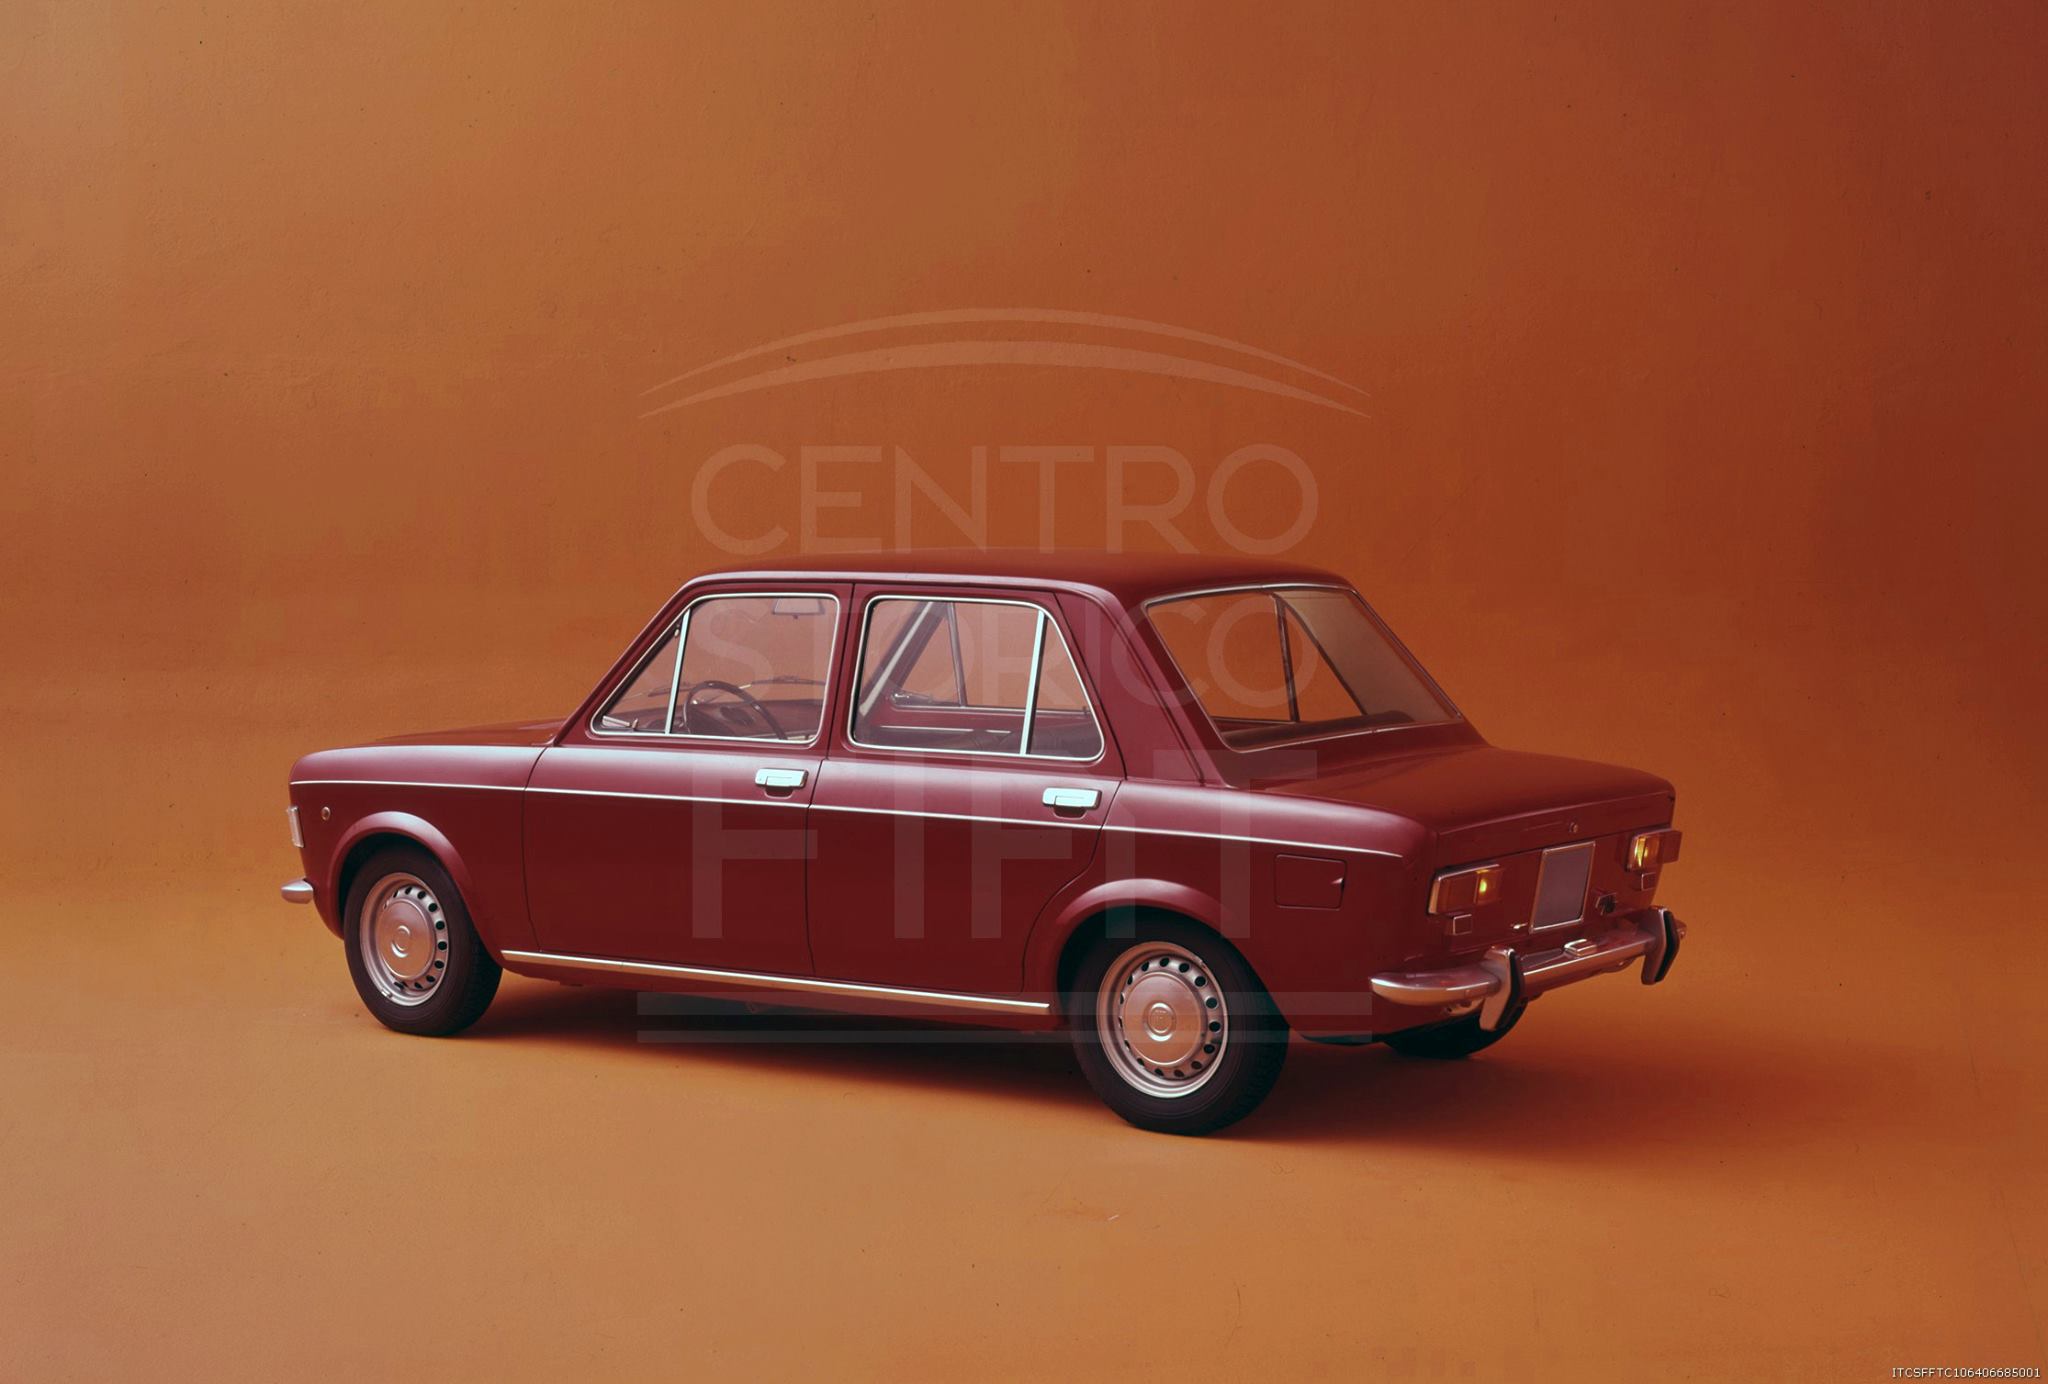 1969_Fiat128-4porte_2019-04-01.jpg